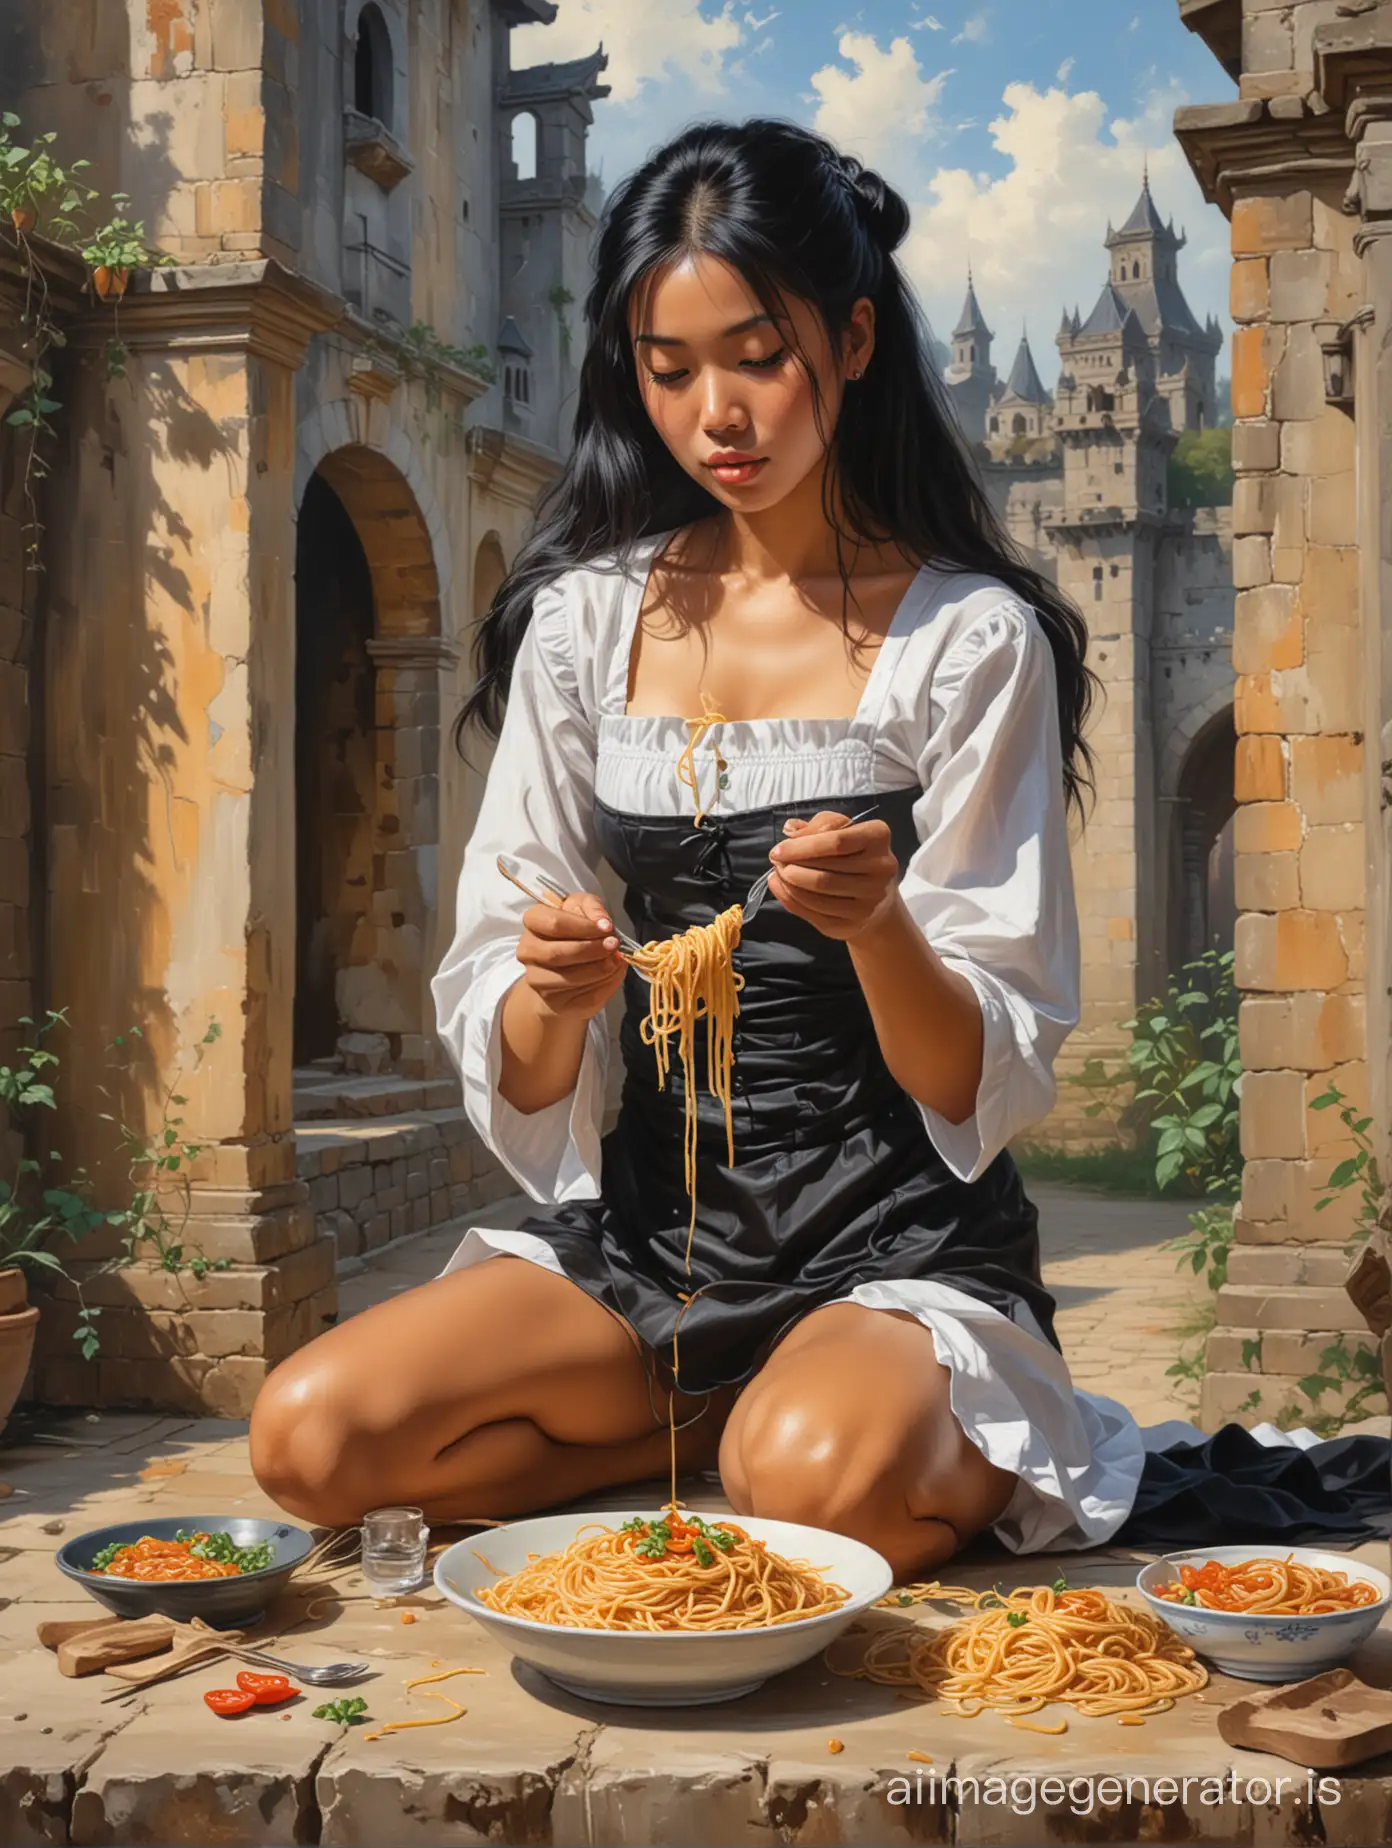 Vietnamese-Maid-Enjoying-Spaghetti-in-Castle-Setting